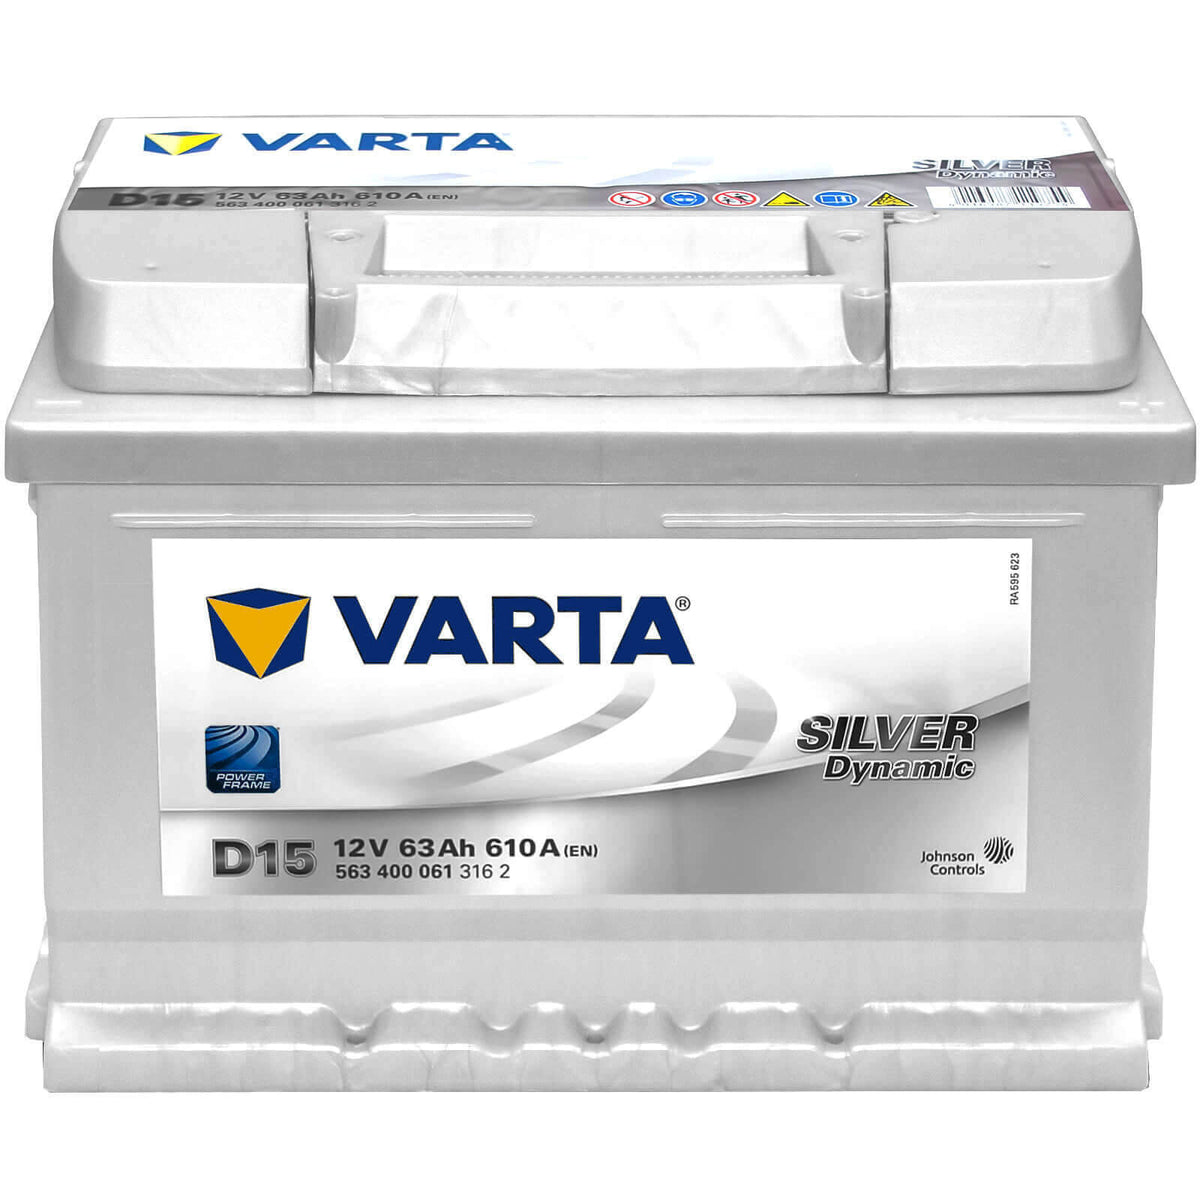 Varta D15 Silver Dynamic 12V 63Ah 610A/EN